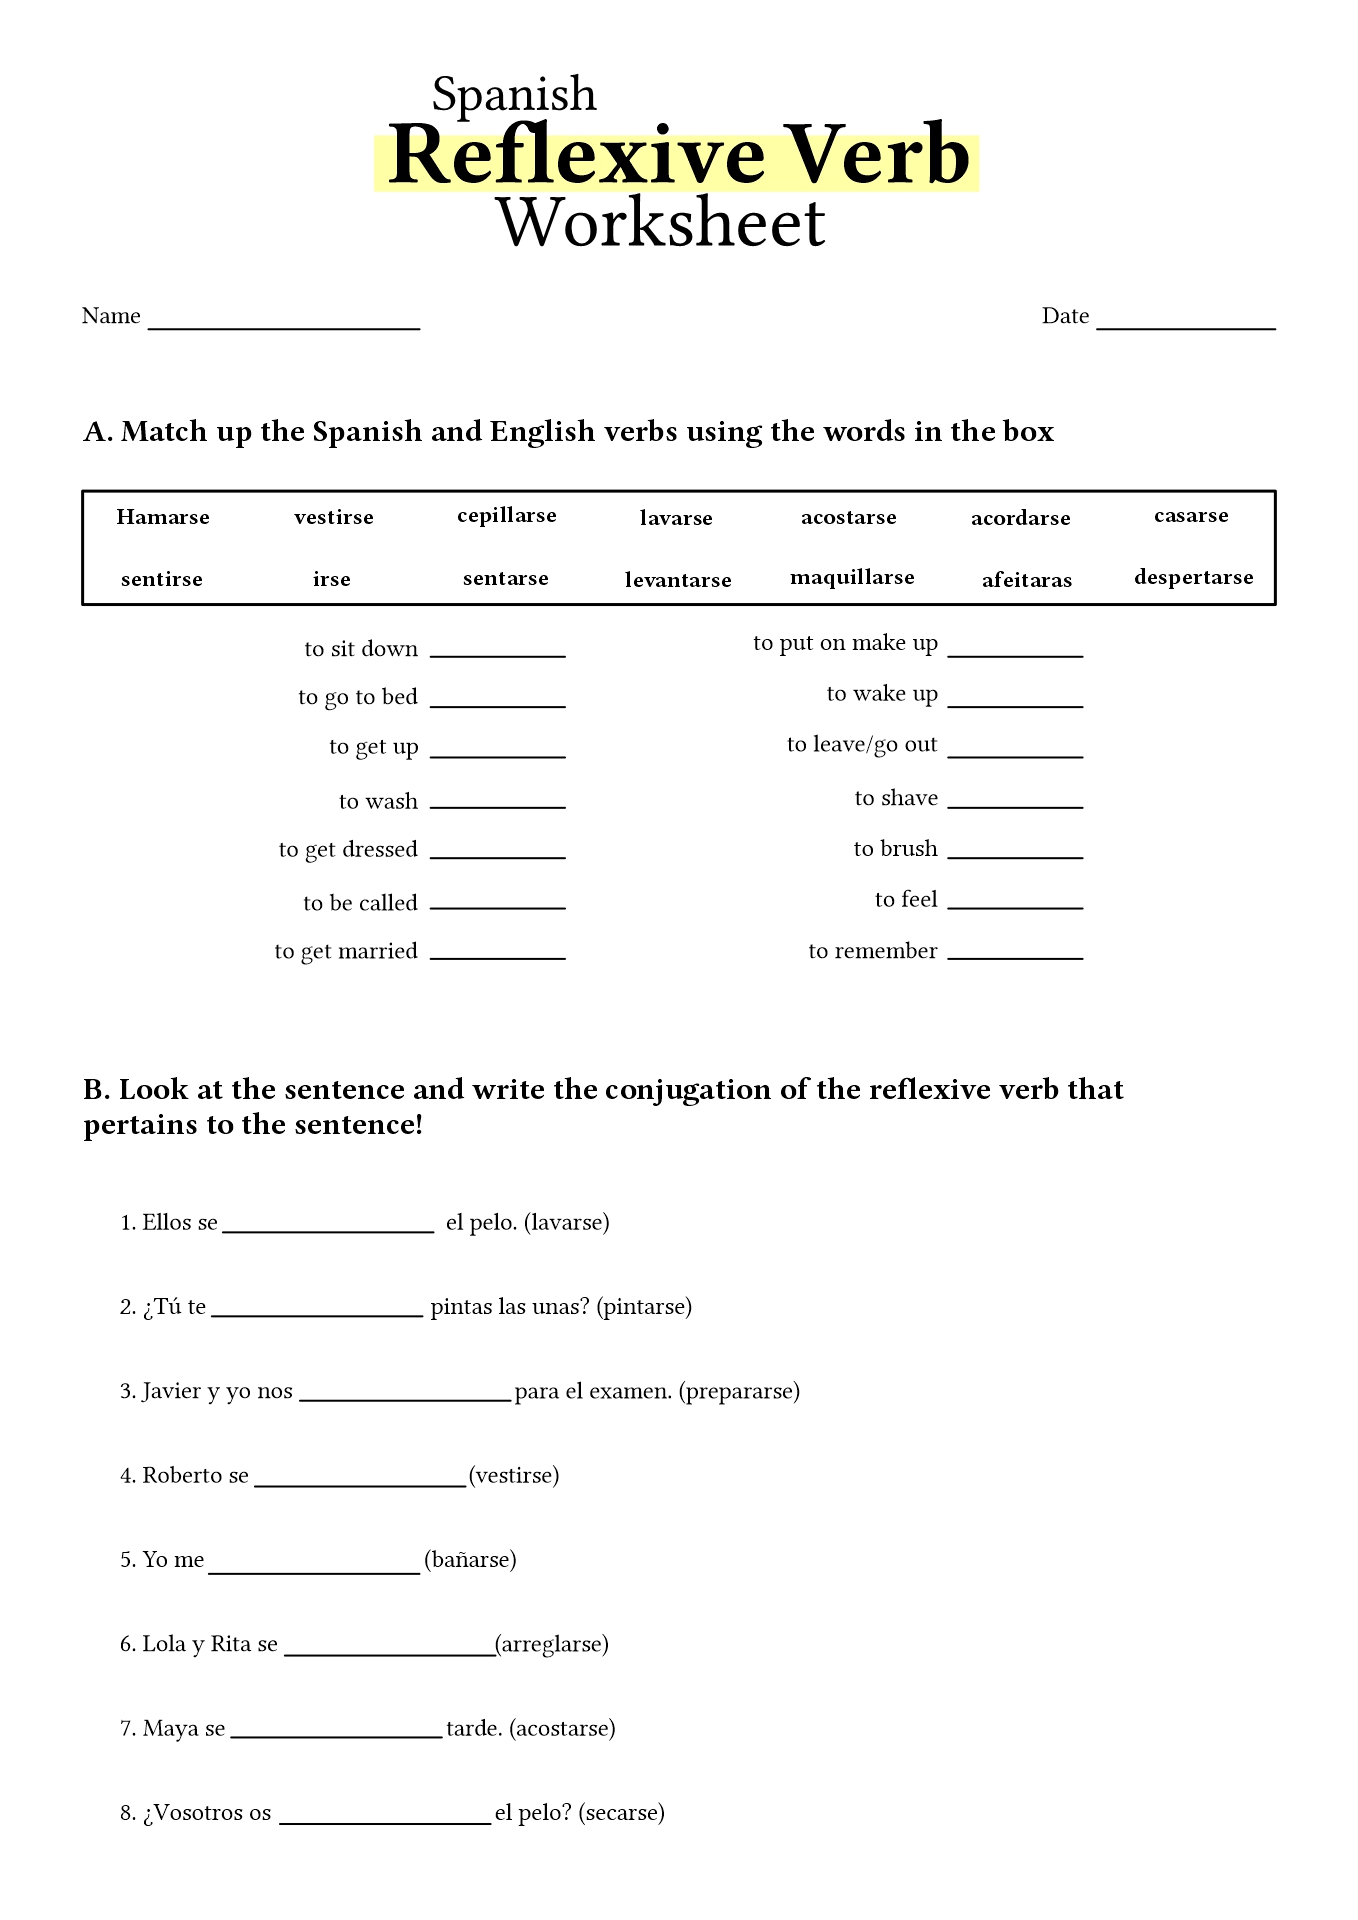 Worksheet On Reflexive Verbs In Spanish